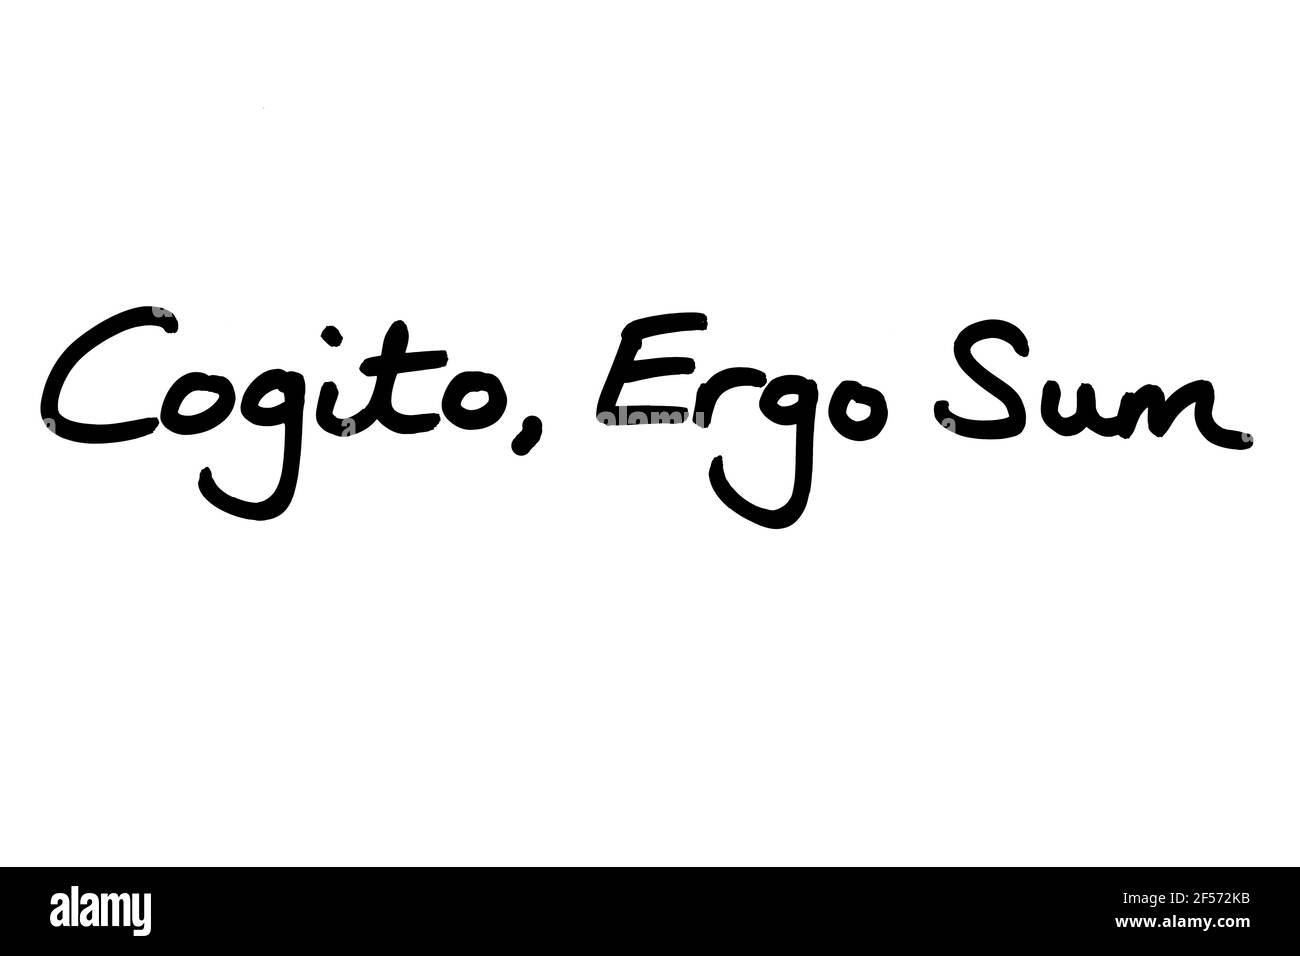 Cogito Ergo Sum, handwritten on a white background. Stock Photo